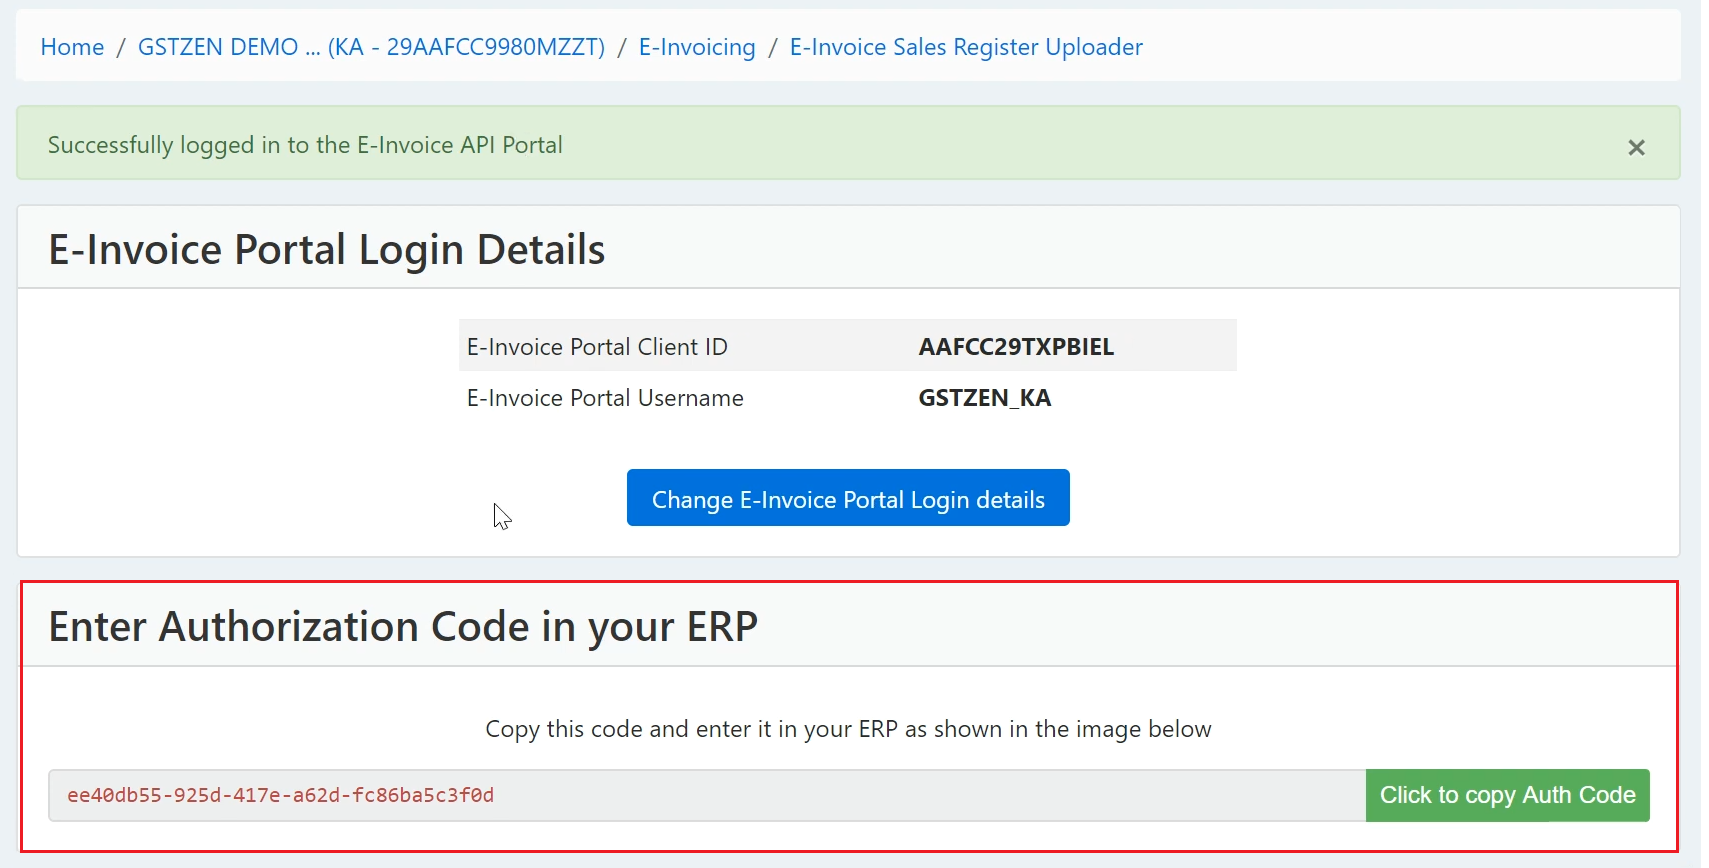 Enter e-Invoicing Authorization Code